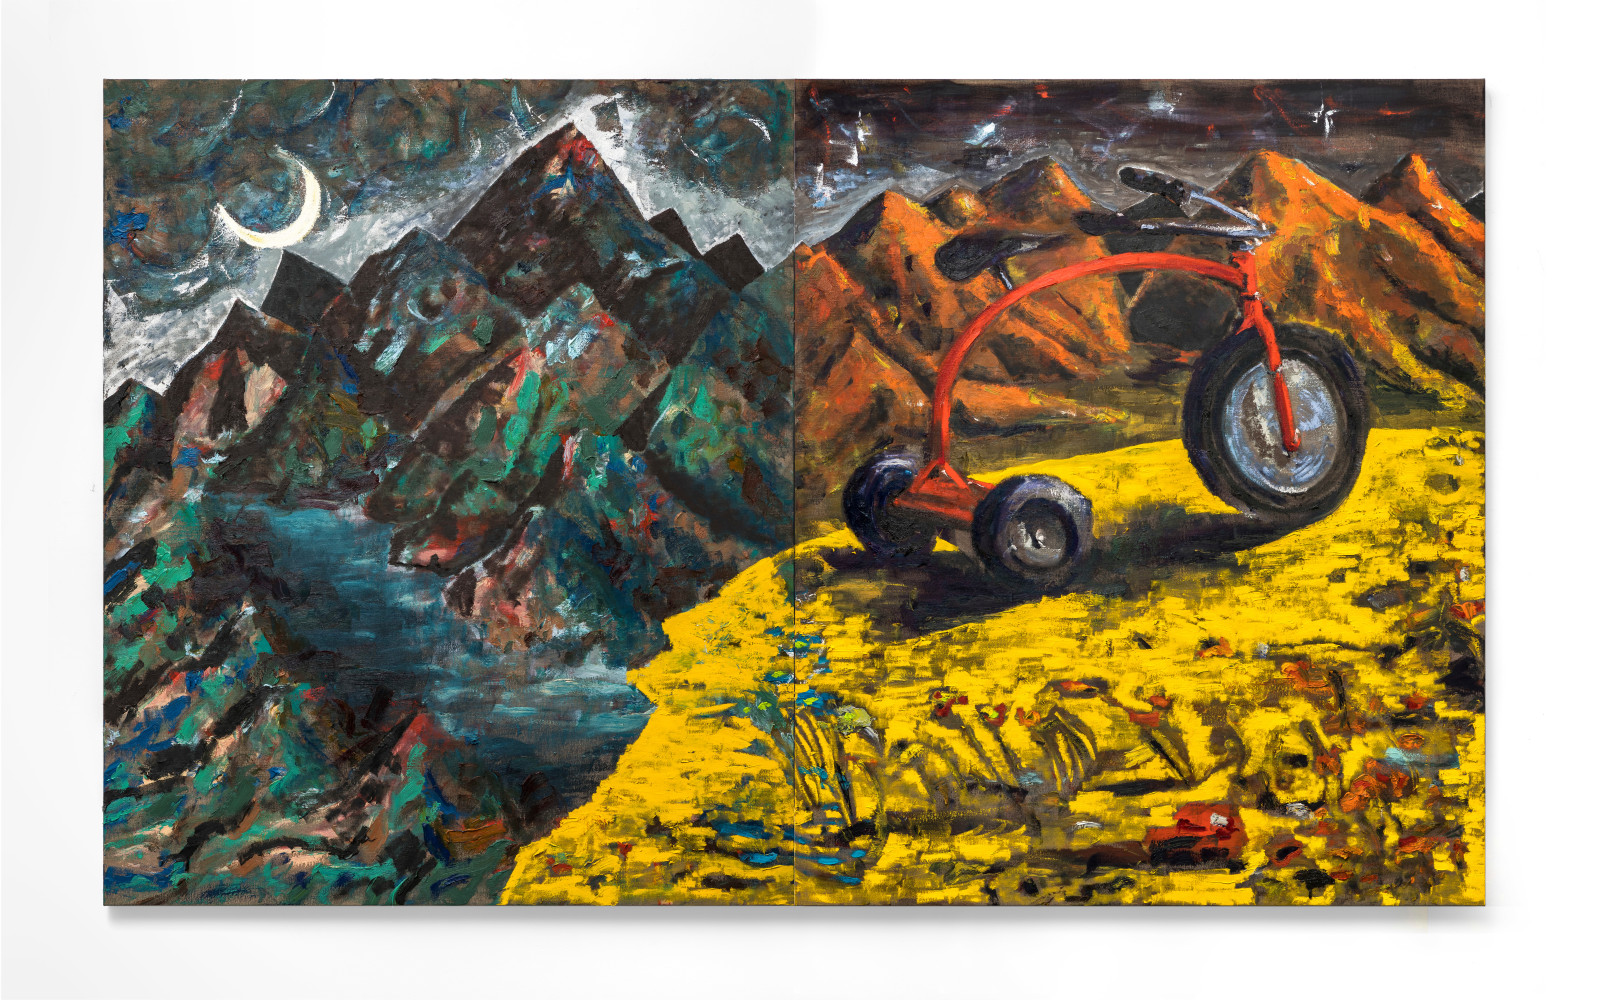 Ken Taylor Reynaga
DIa y Noche, 2023
Oil on linen
Diptych 72 x 120 in
Each canvas 36 x 60